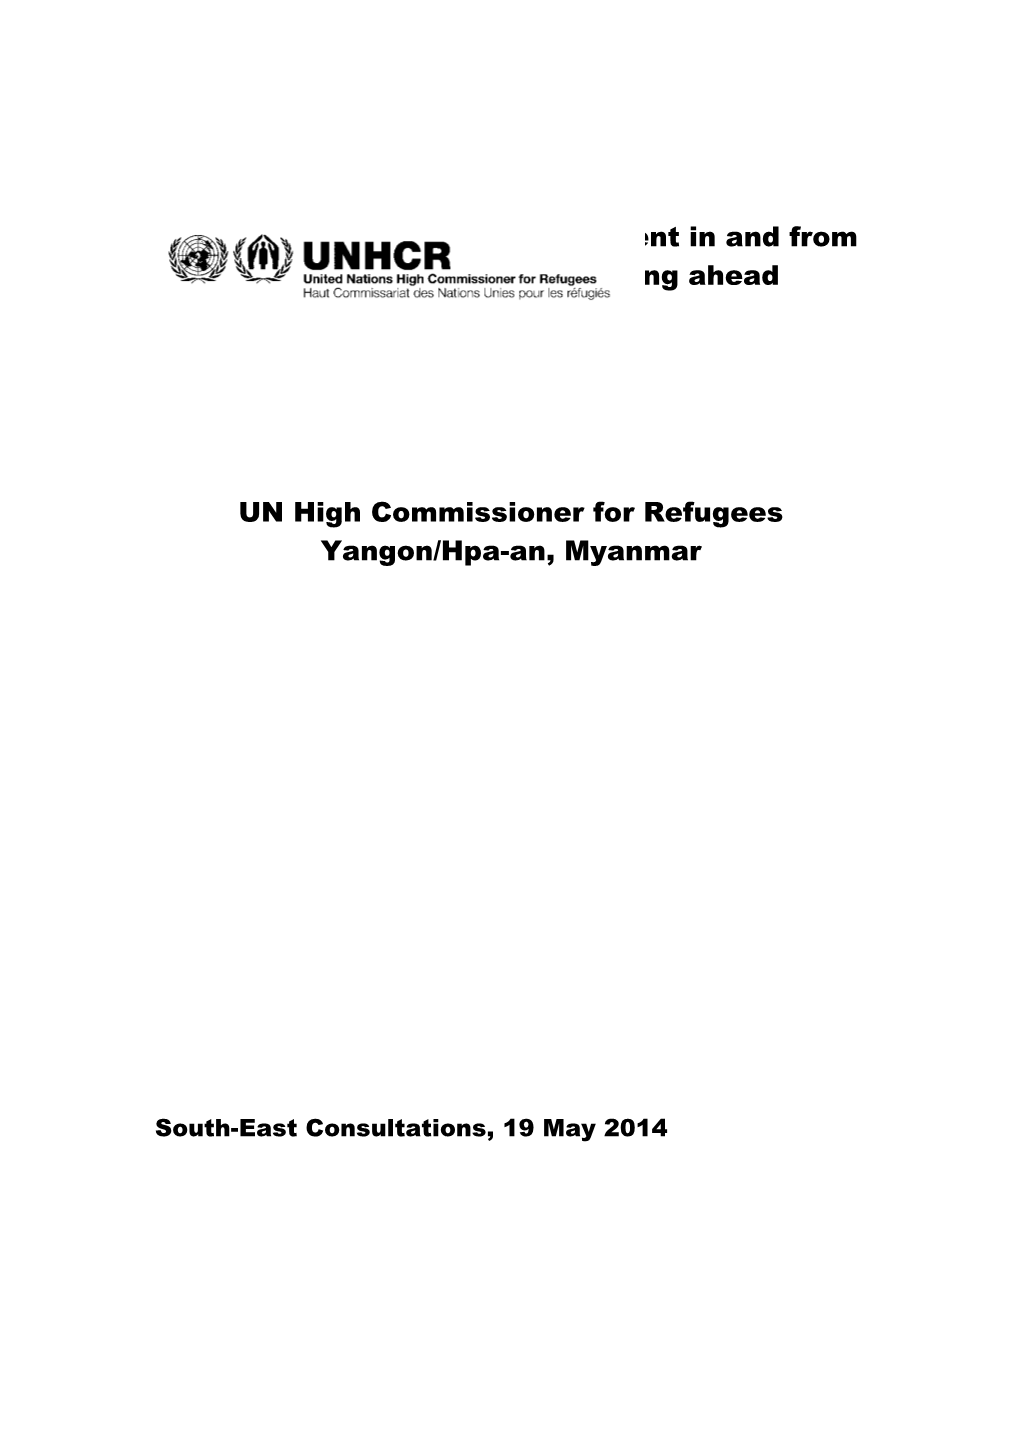 UN Framework for Support for the Return, Reintegration & Rehabilitation of Displaced Populations